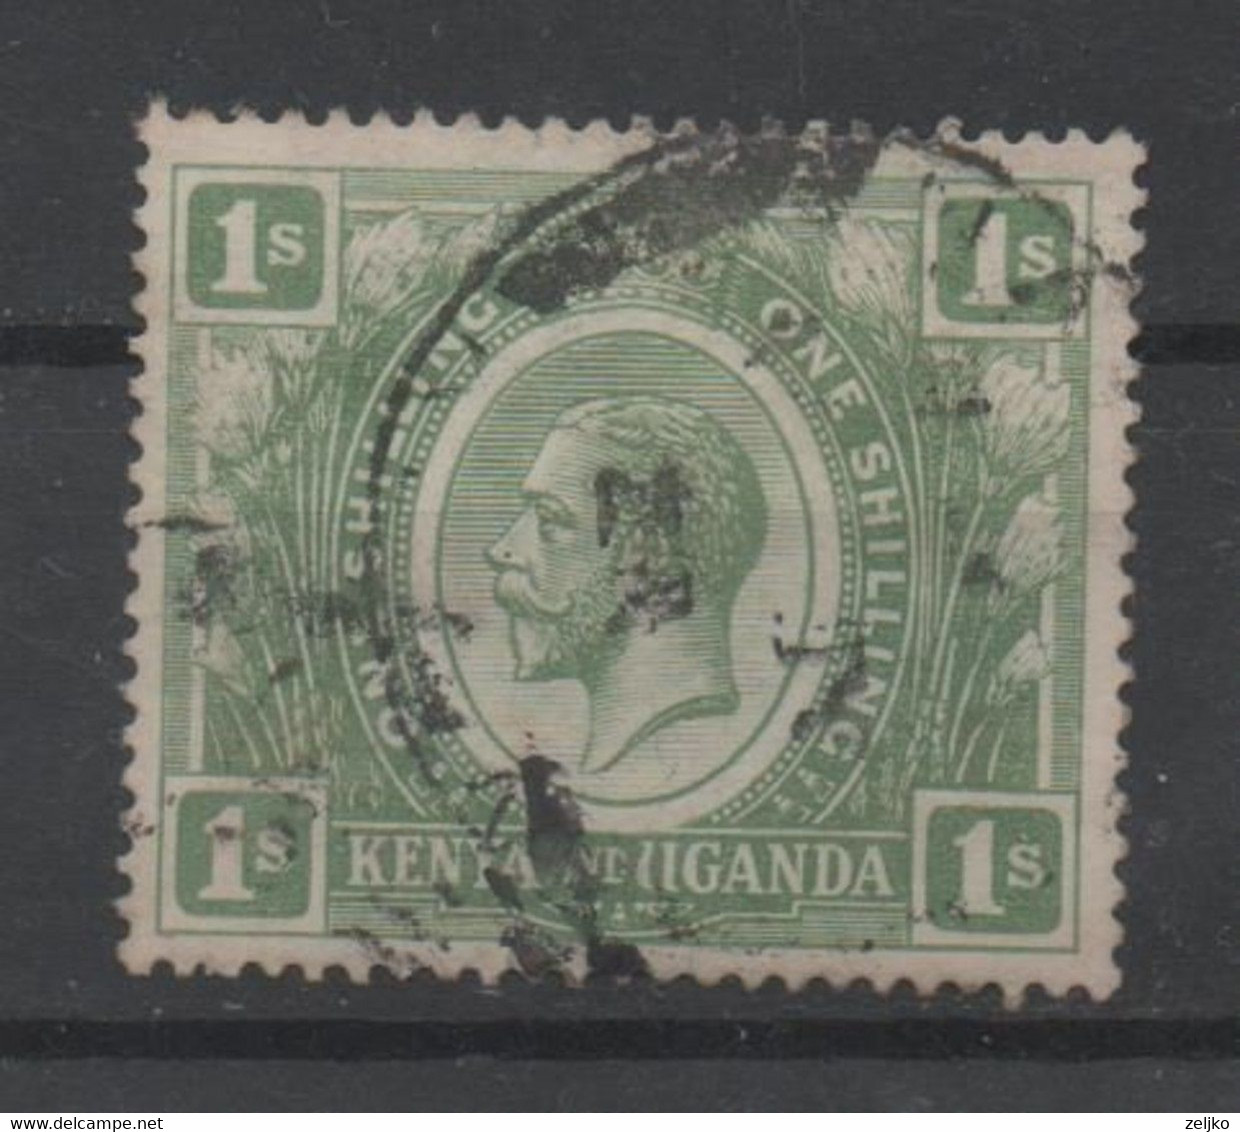 Kenya And Uganda, Used, 1922, Michel 10 - Kenya & Ouganda